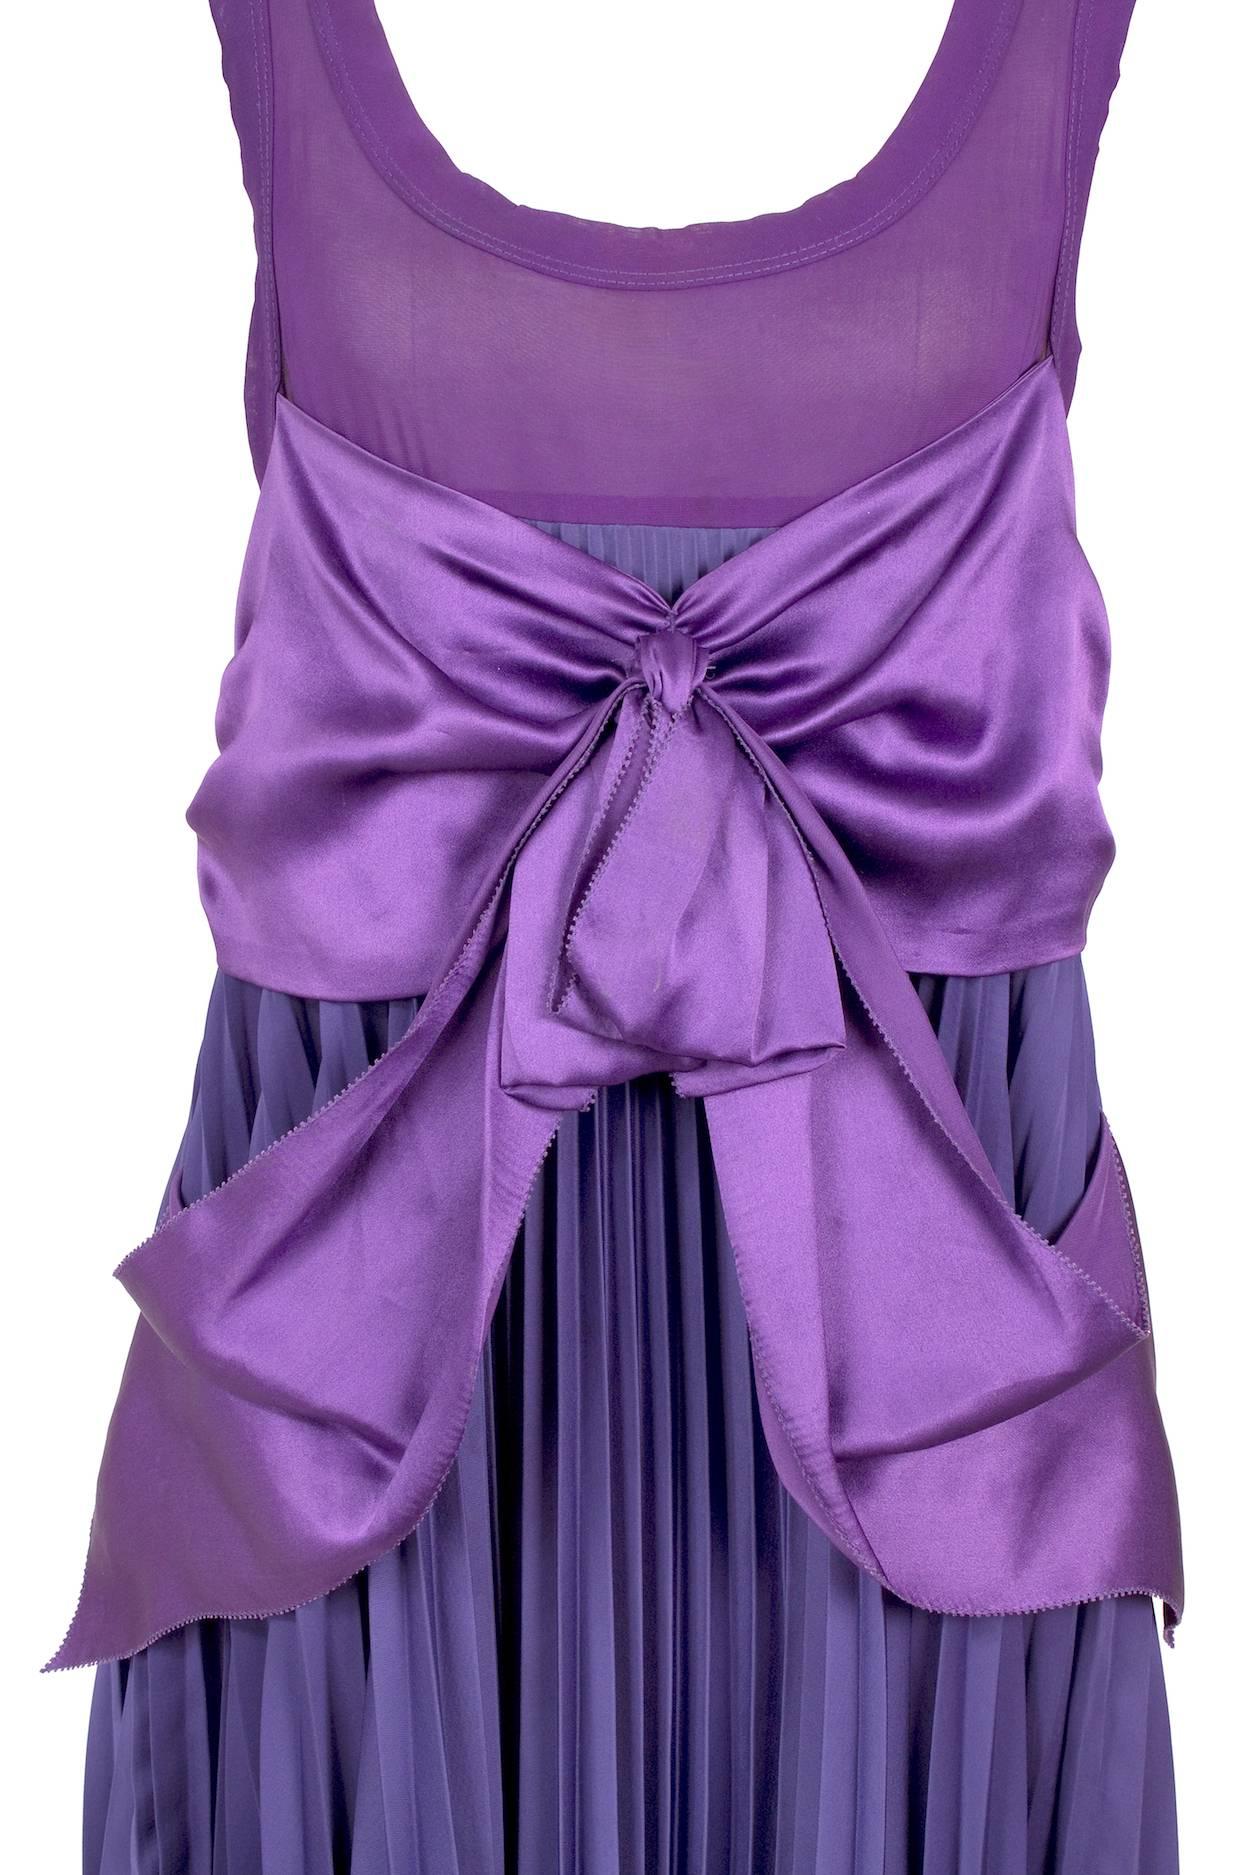 Purple Jean Paul Gaultier Sleeveless Dress with Bow and Pleated Skirt circa 1990s